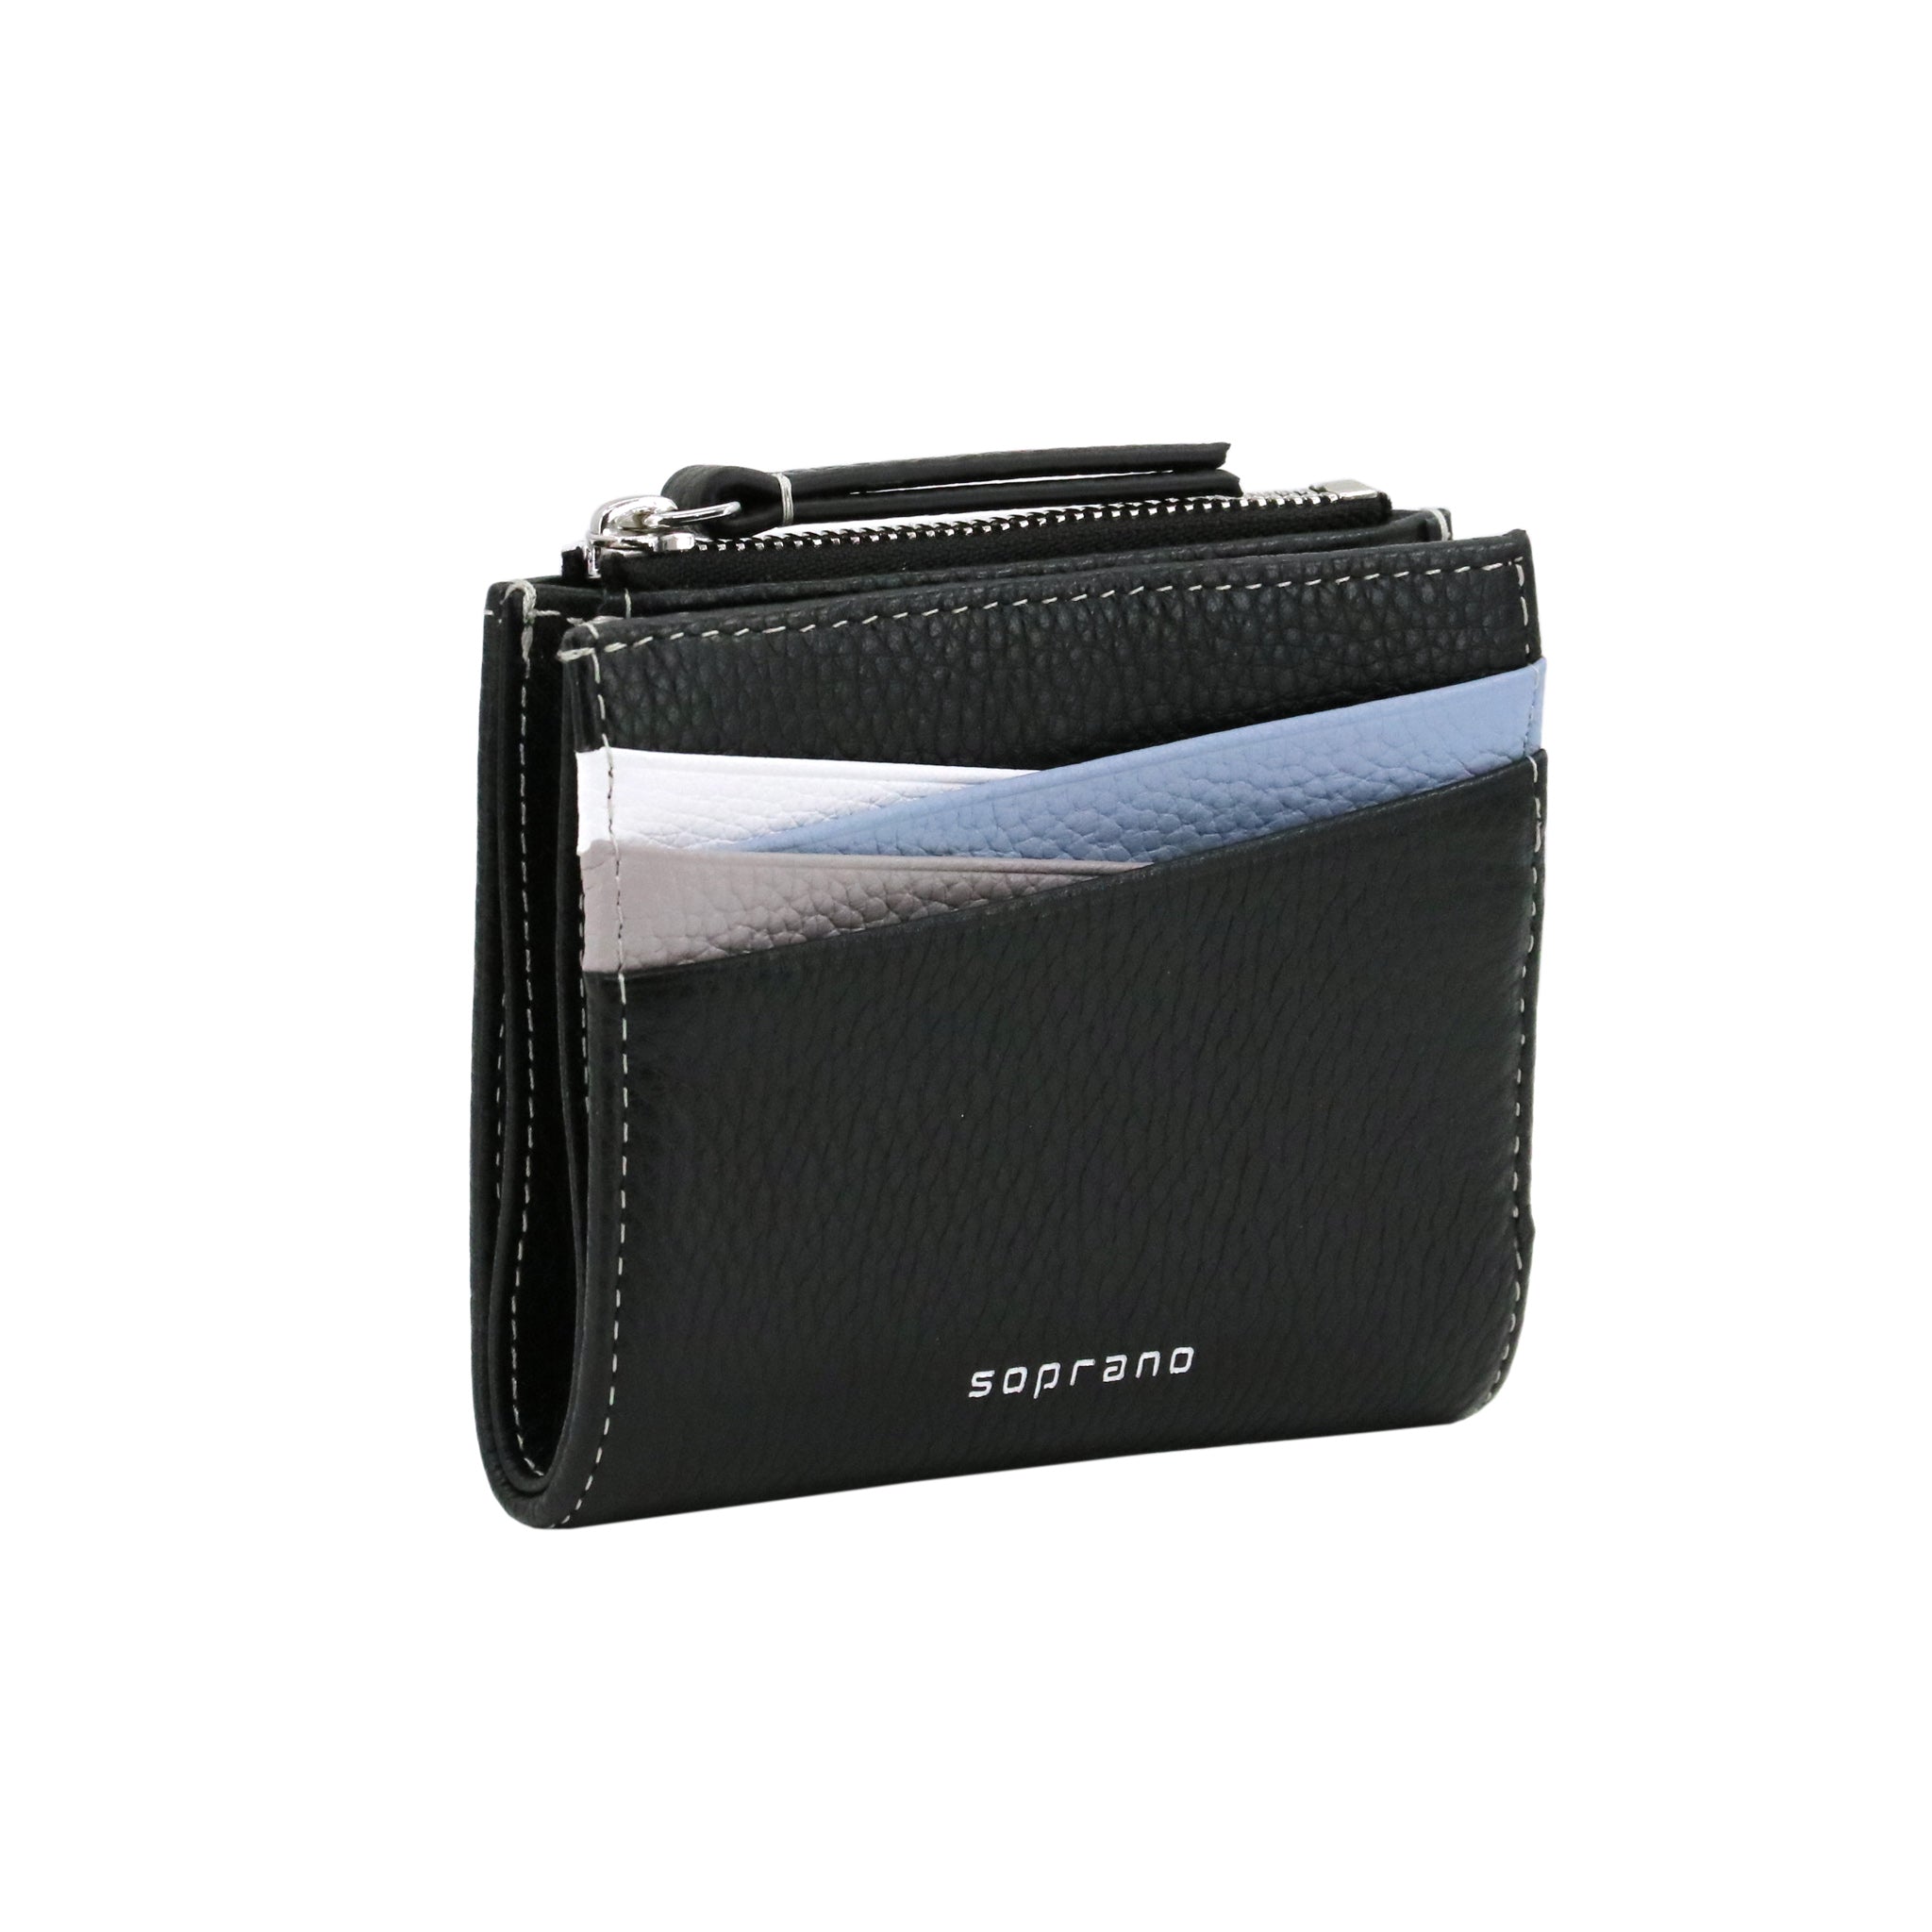 Multi color small wallet